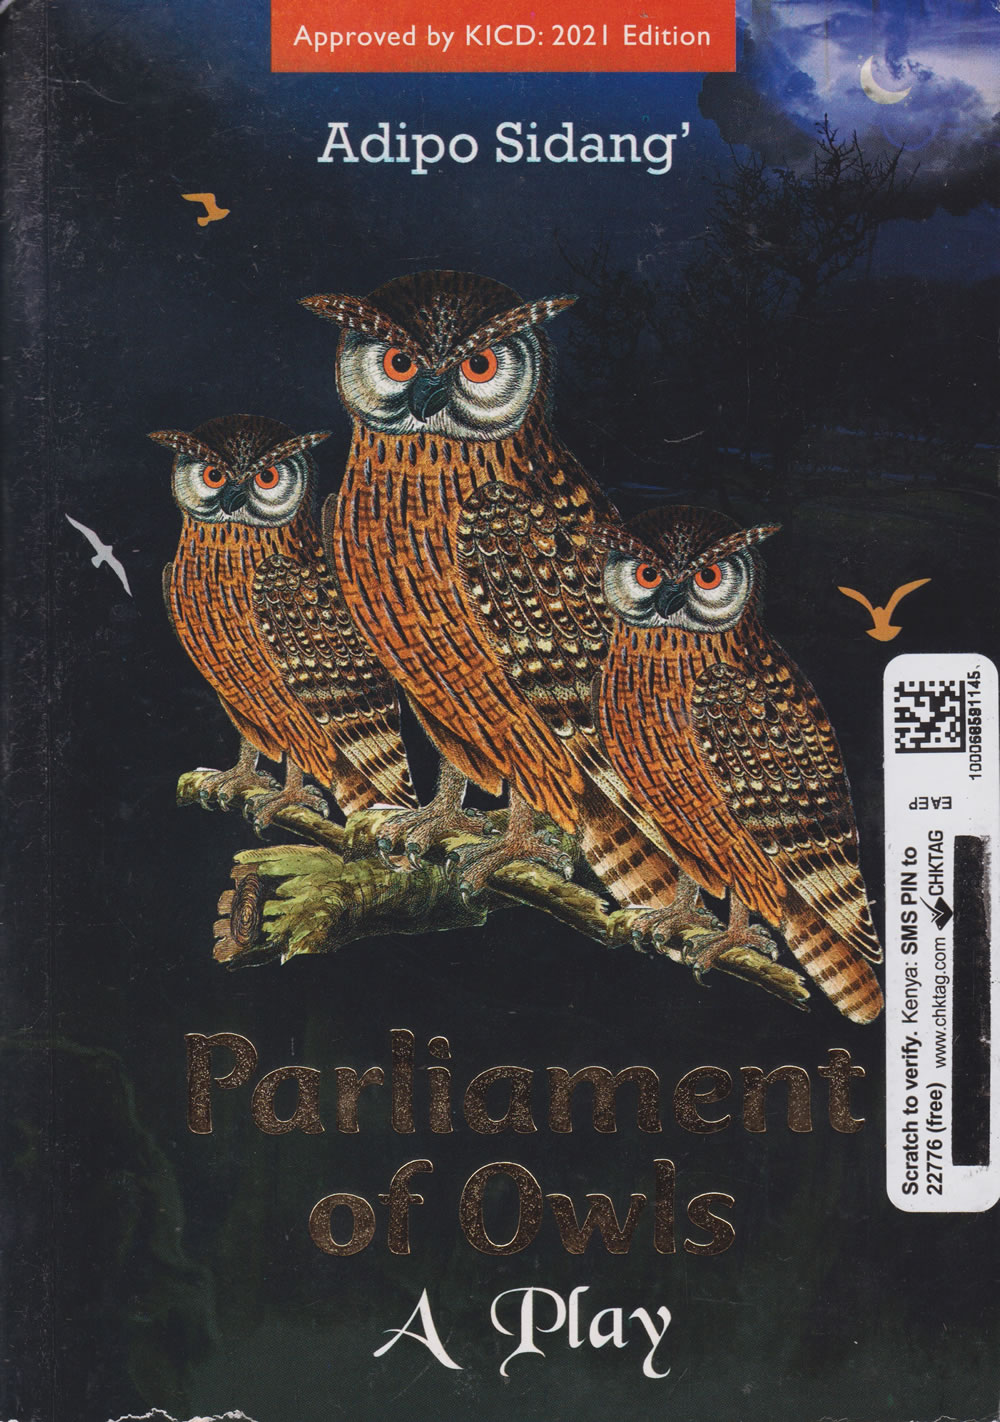 Parliament of owls